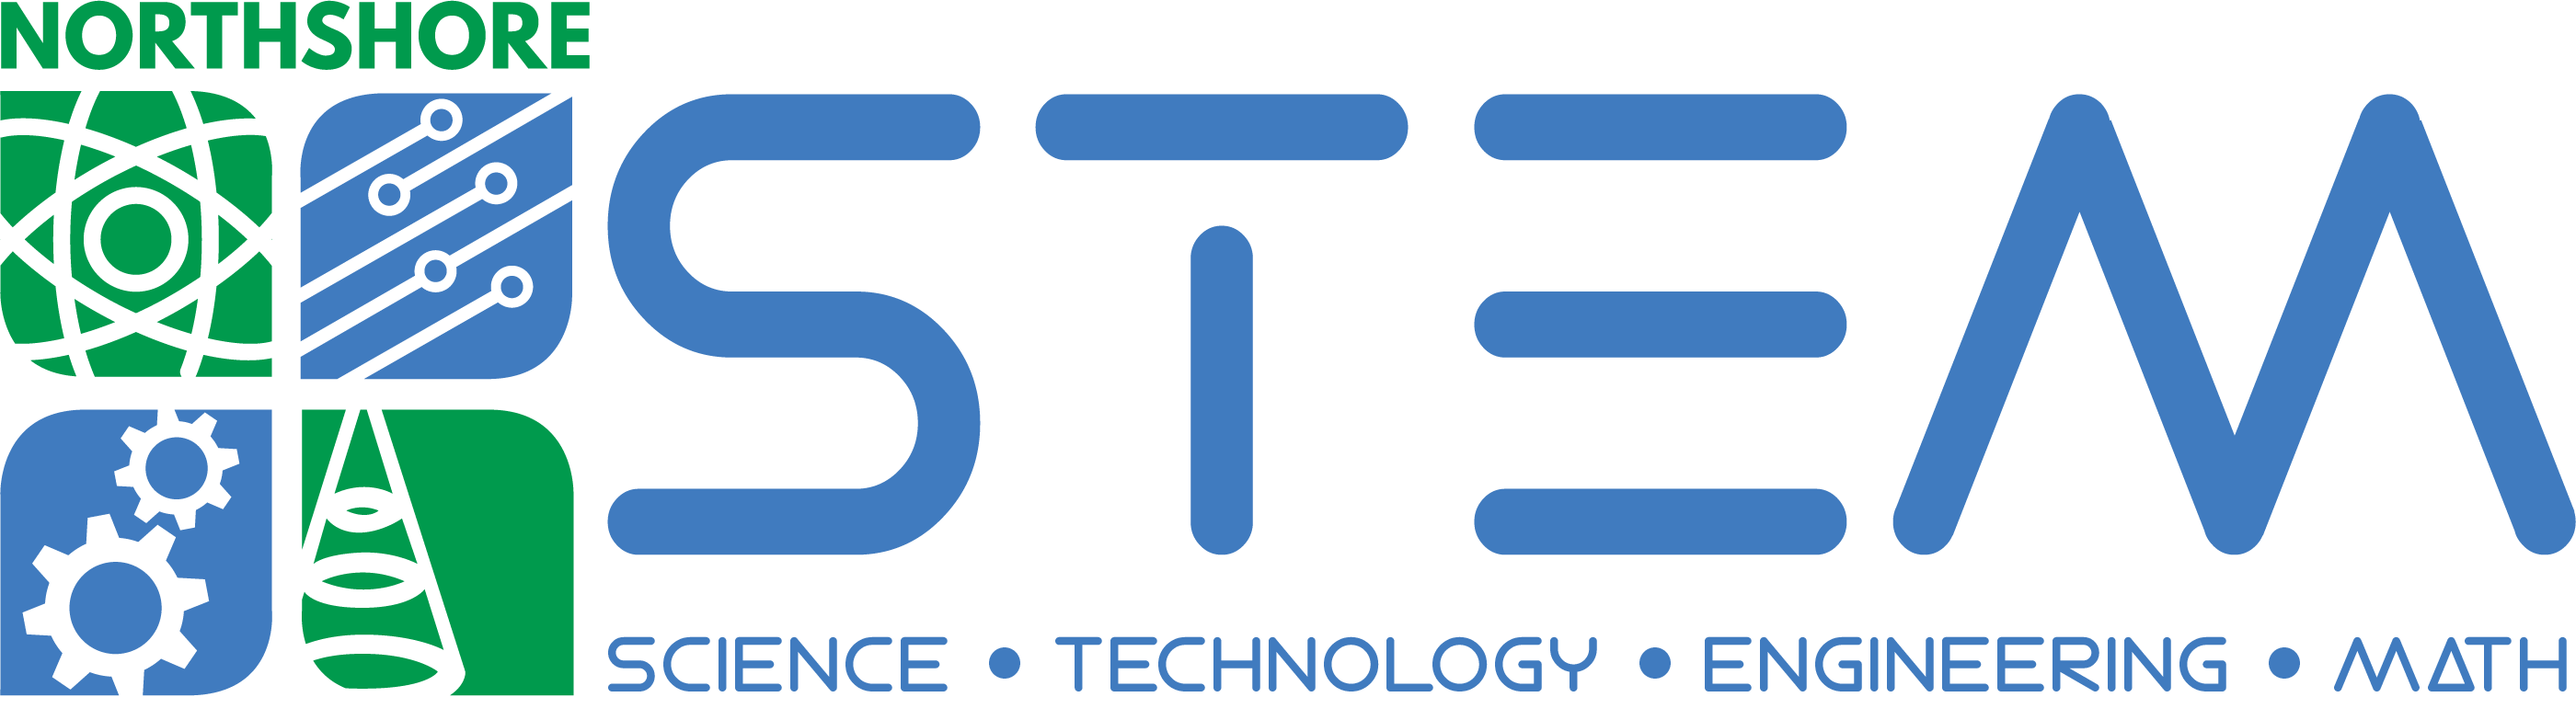 Northshore STEM logo